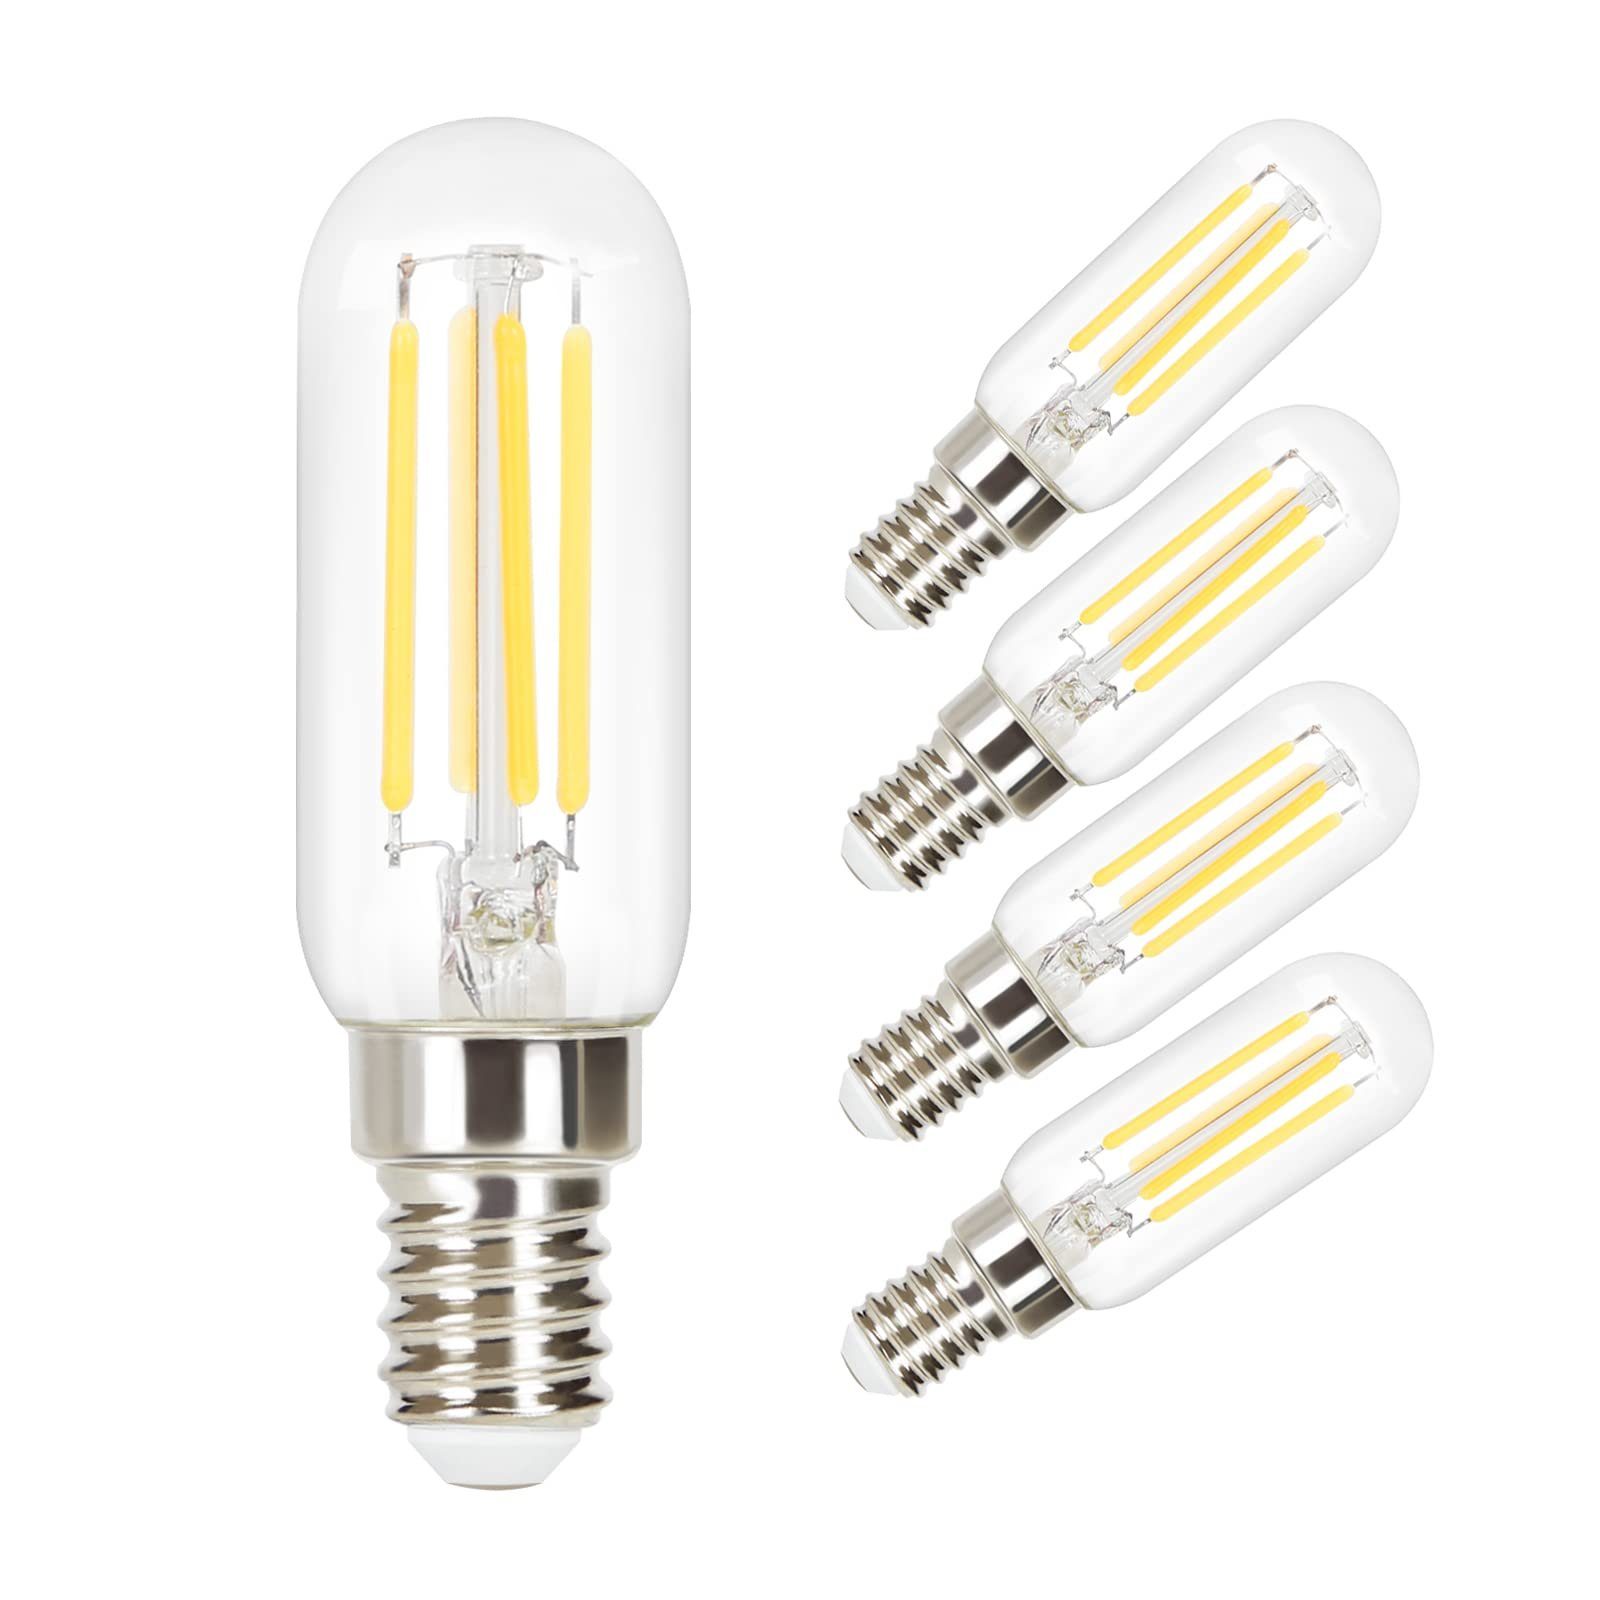 ZMH LED-Leuchtmittel Edison LED Vintage Glühbirne - T25 2700K, E14, 4 St., warmweiß, Filament Retro Glas Birne Energiesparlampe